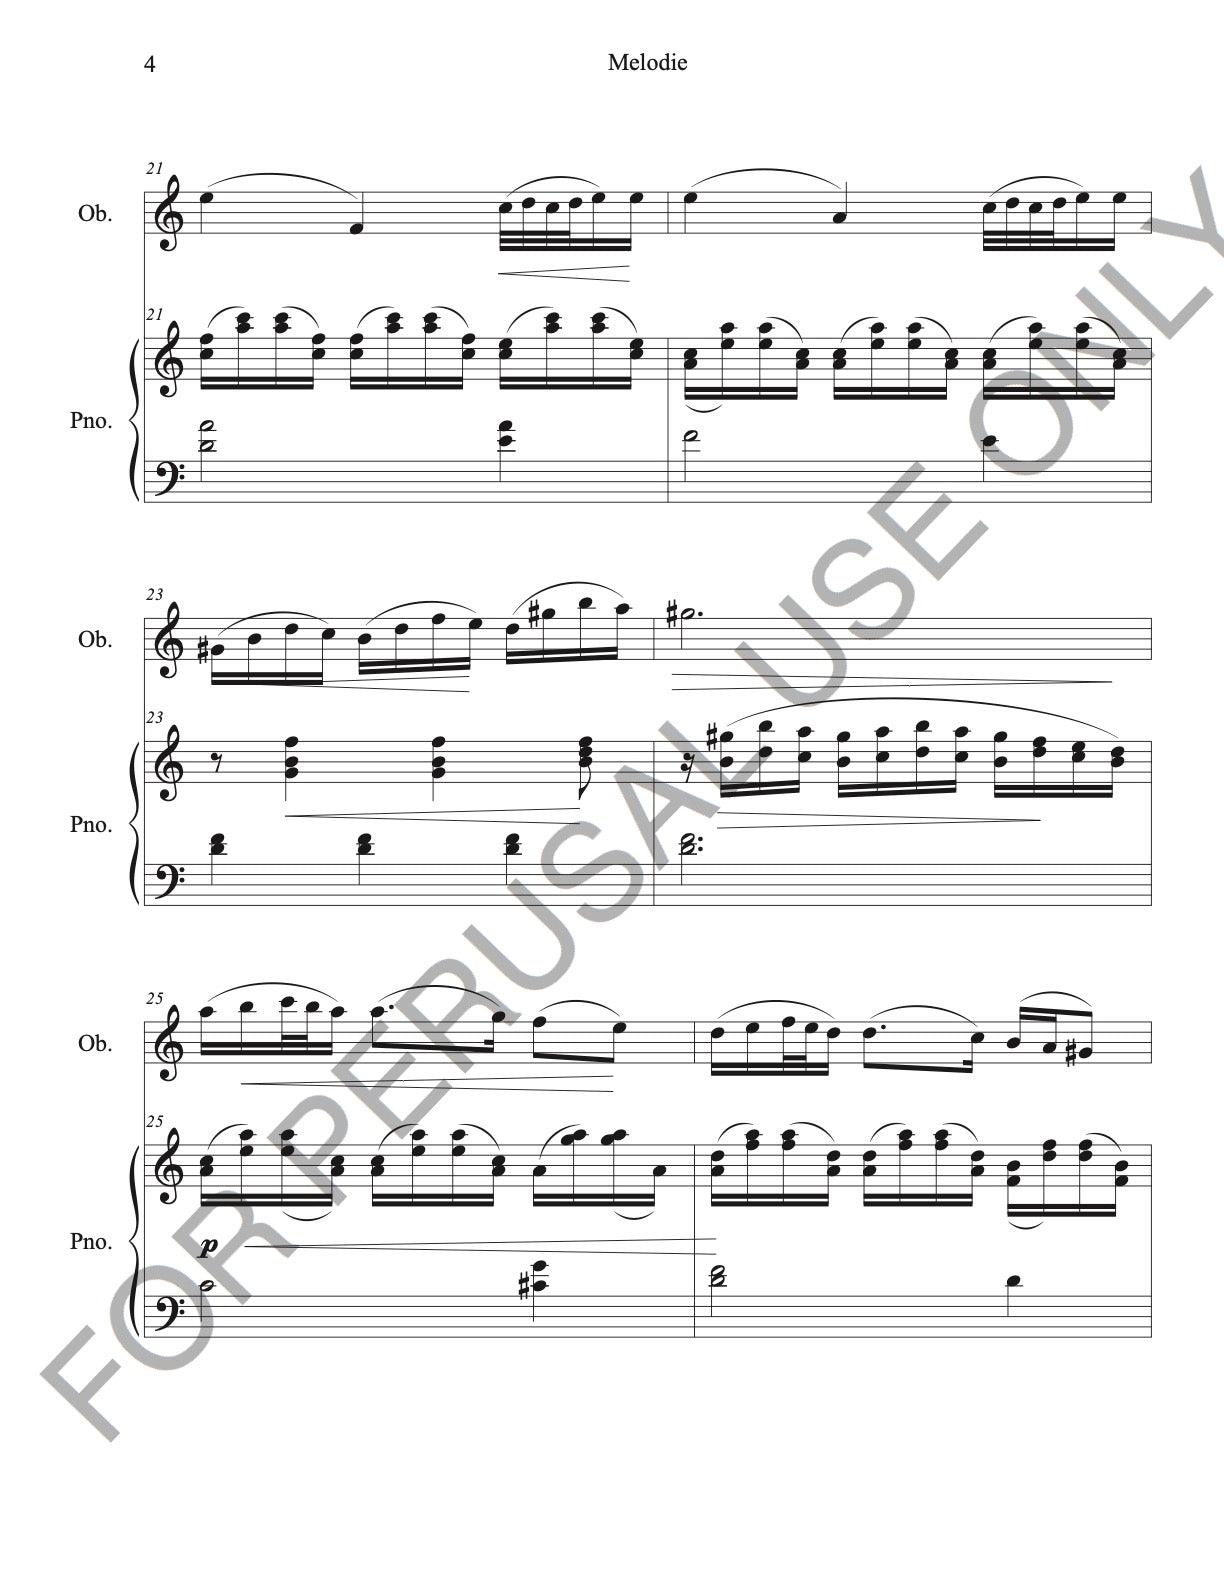 Oboe and Piano sheet music: Gluck's Melodie - ChaipruckMekara